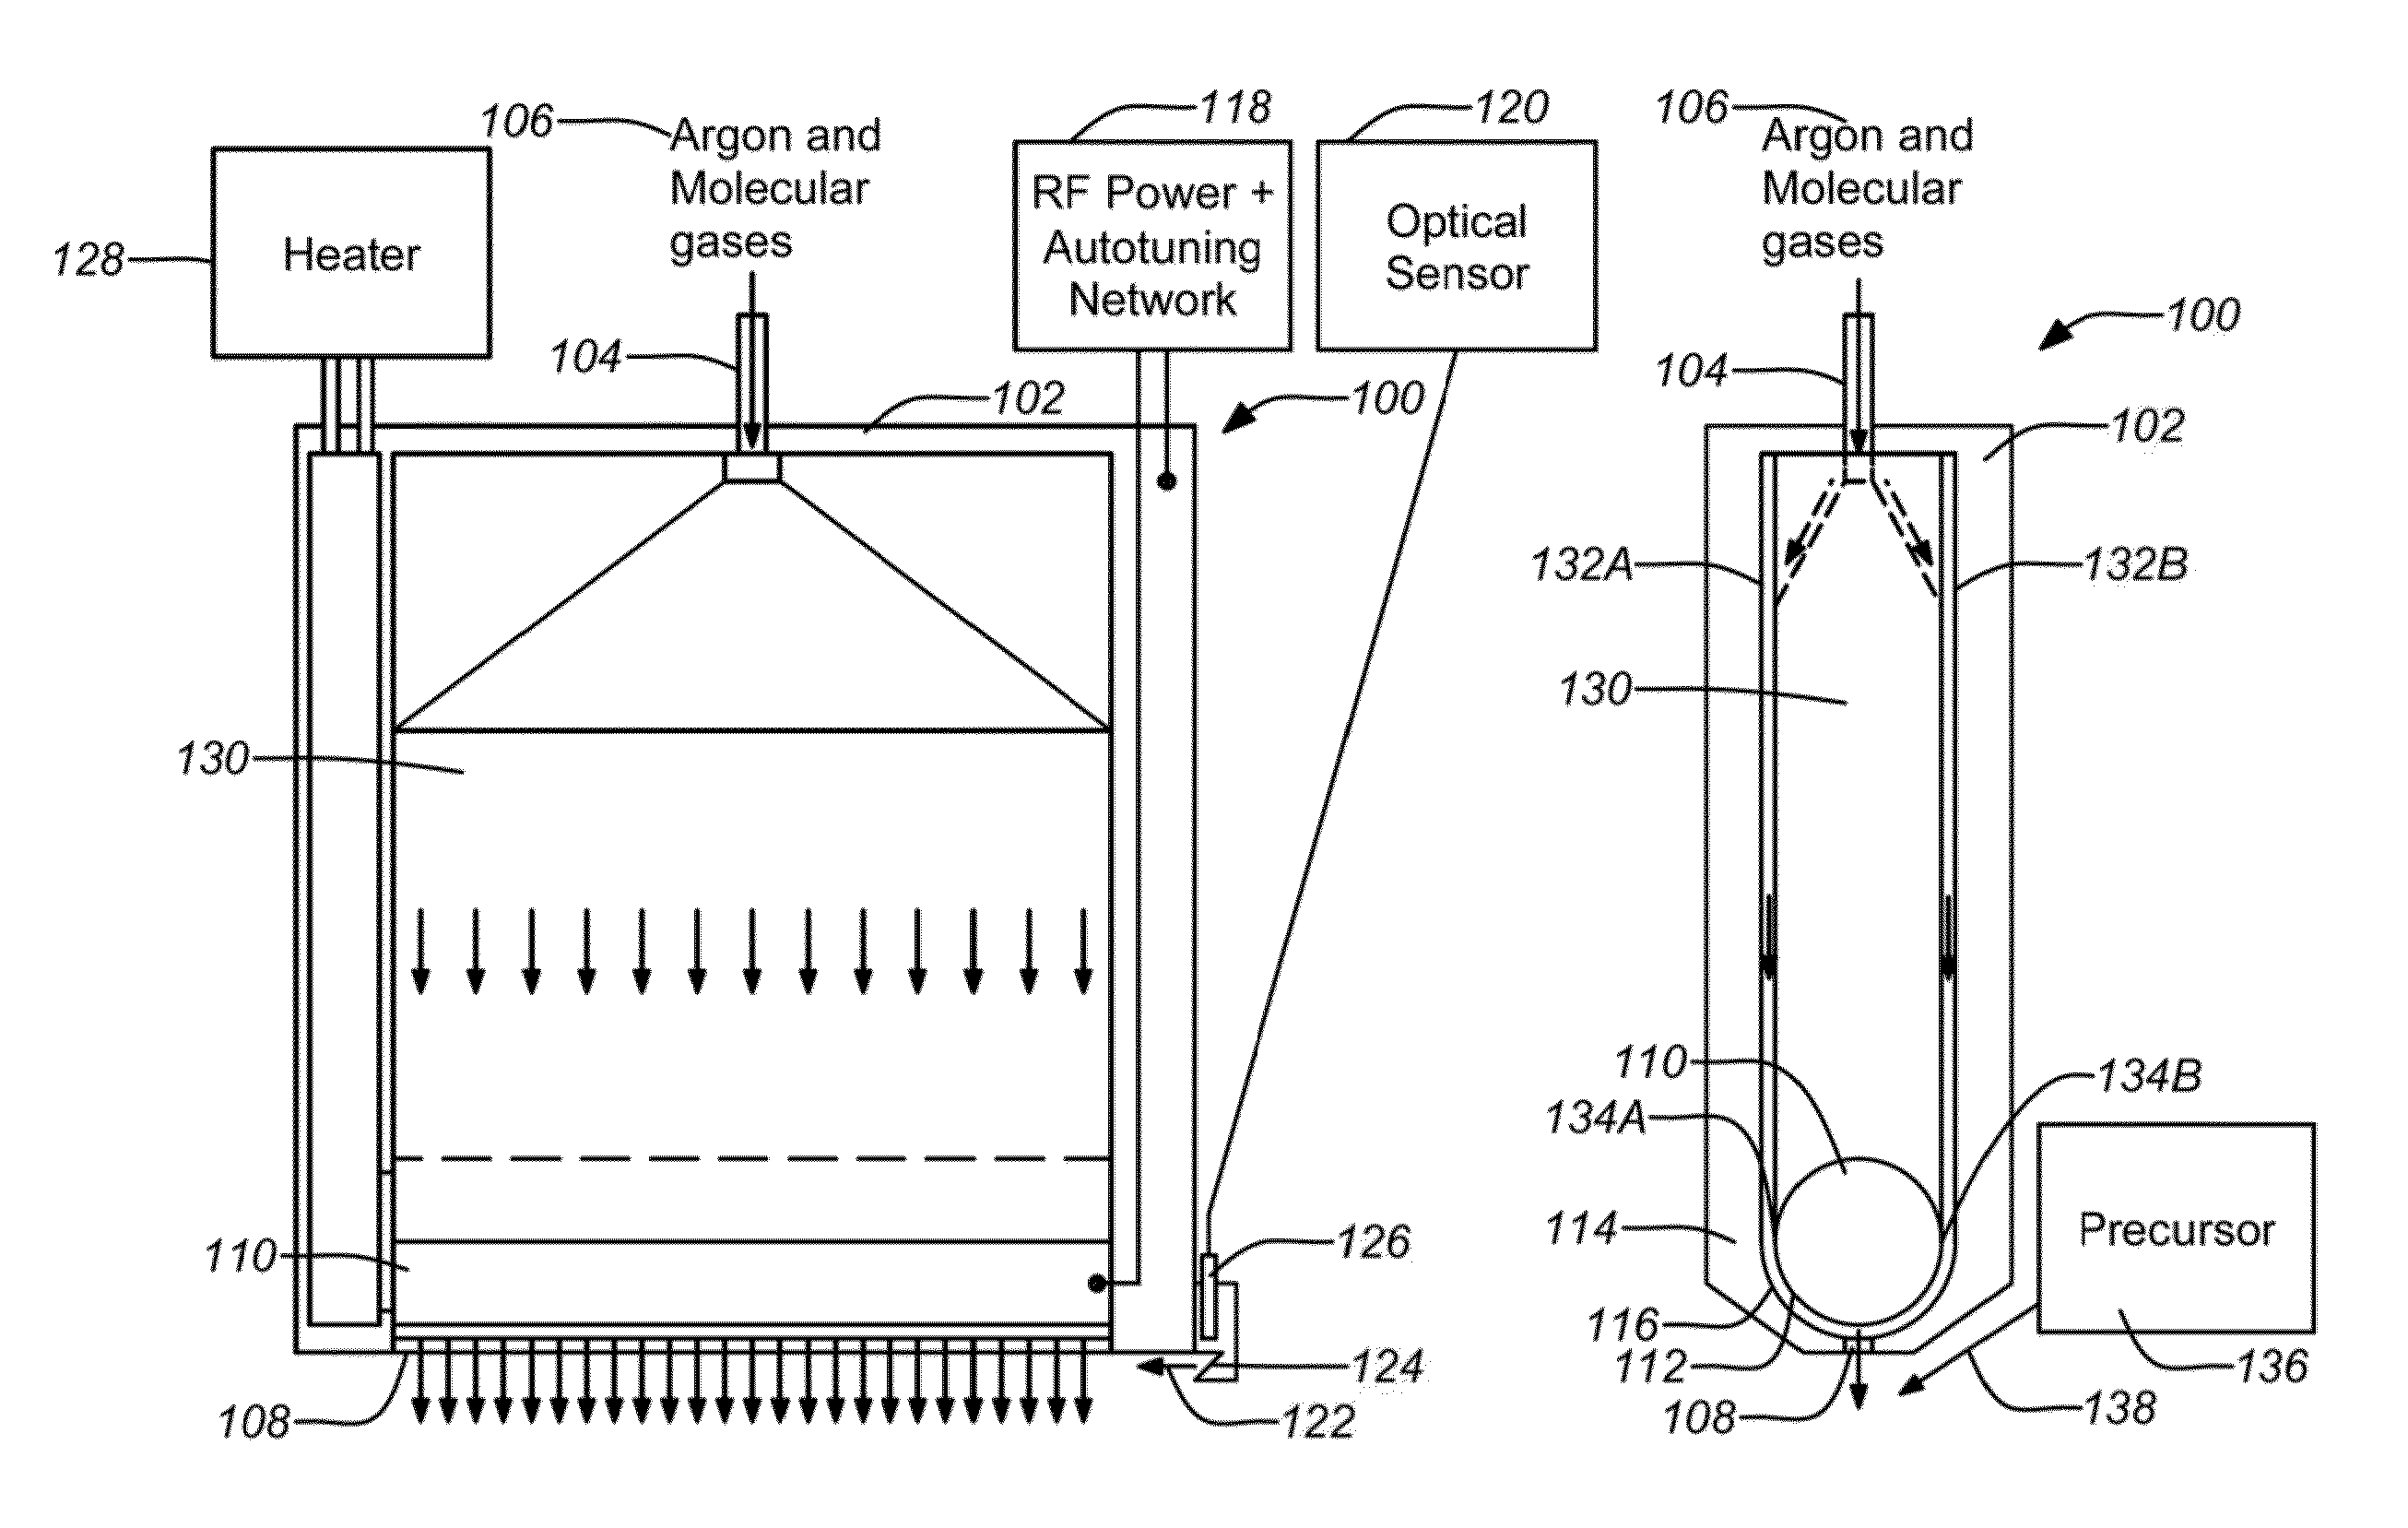 Argon and helium plasma apparatus and methods